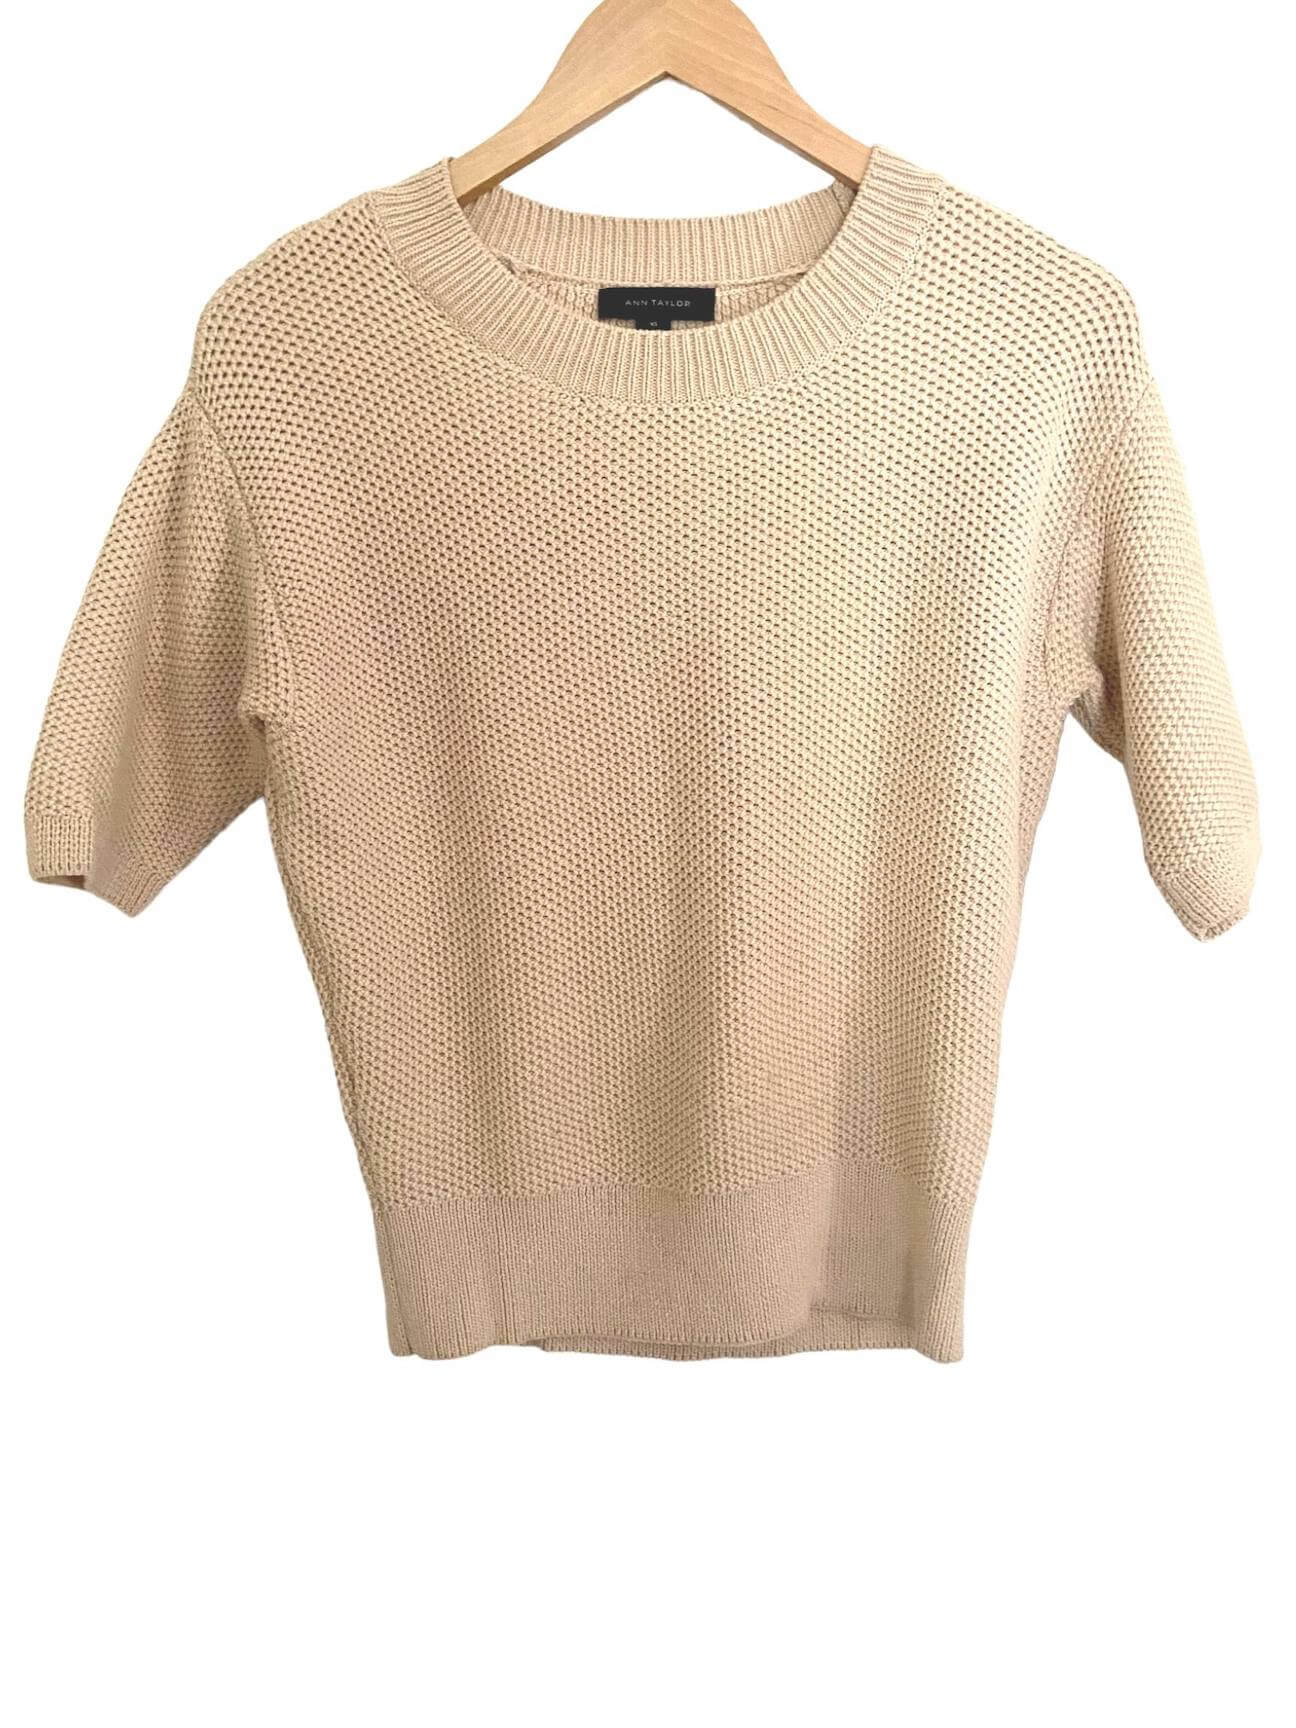 Warm Spring ANN TAYLOR short sleeve sweater